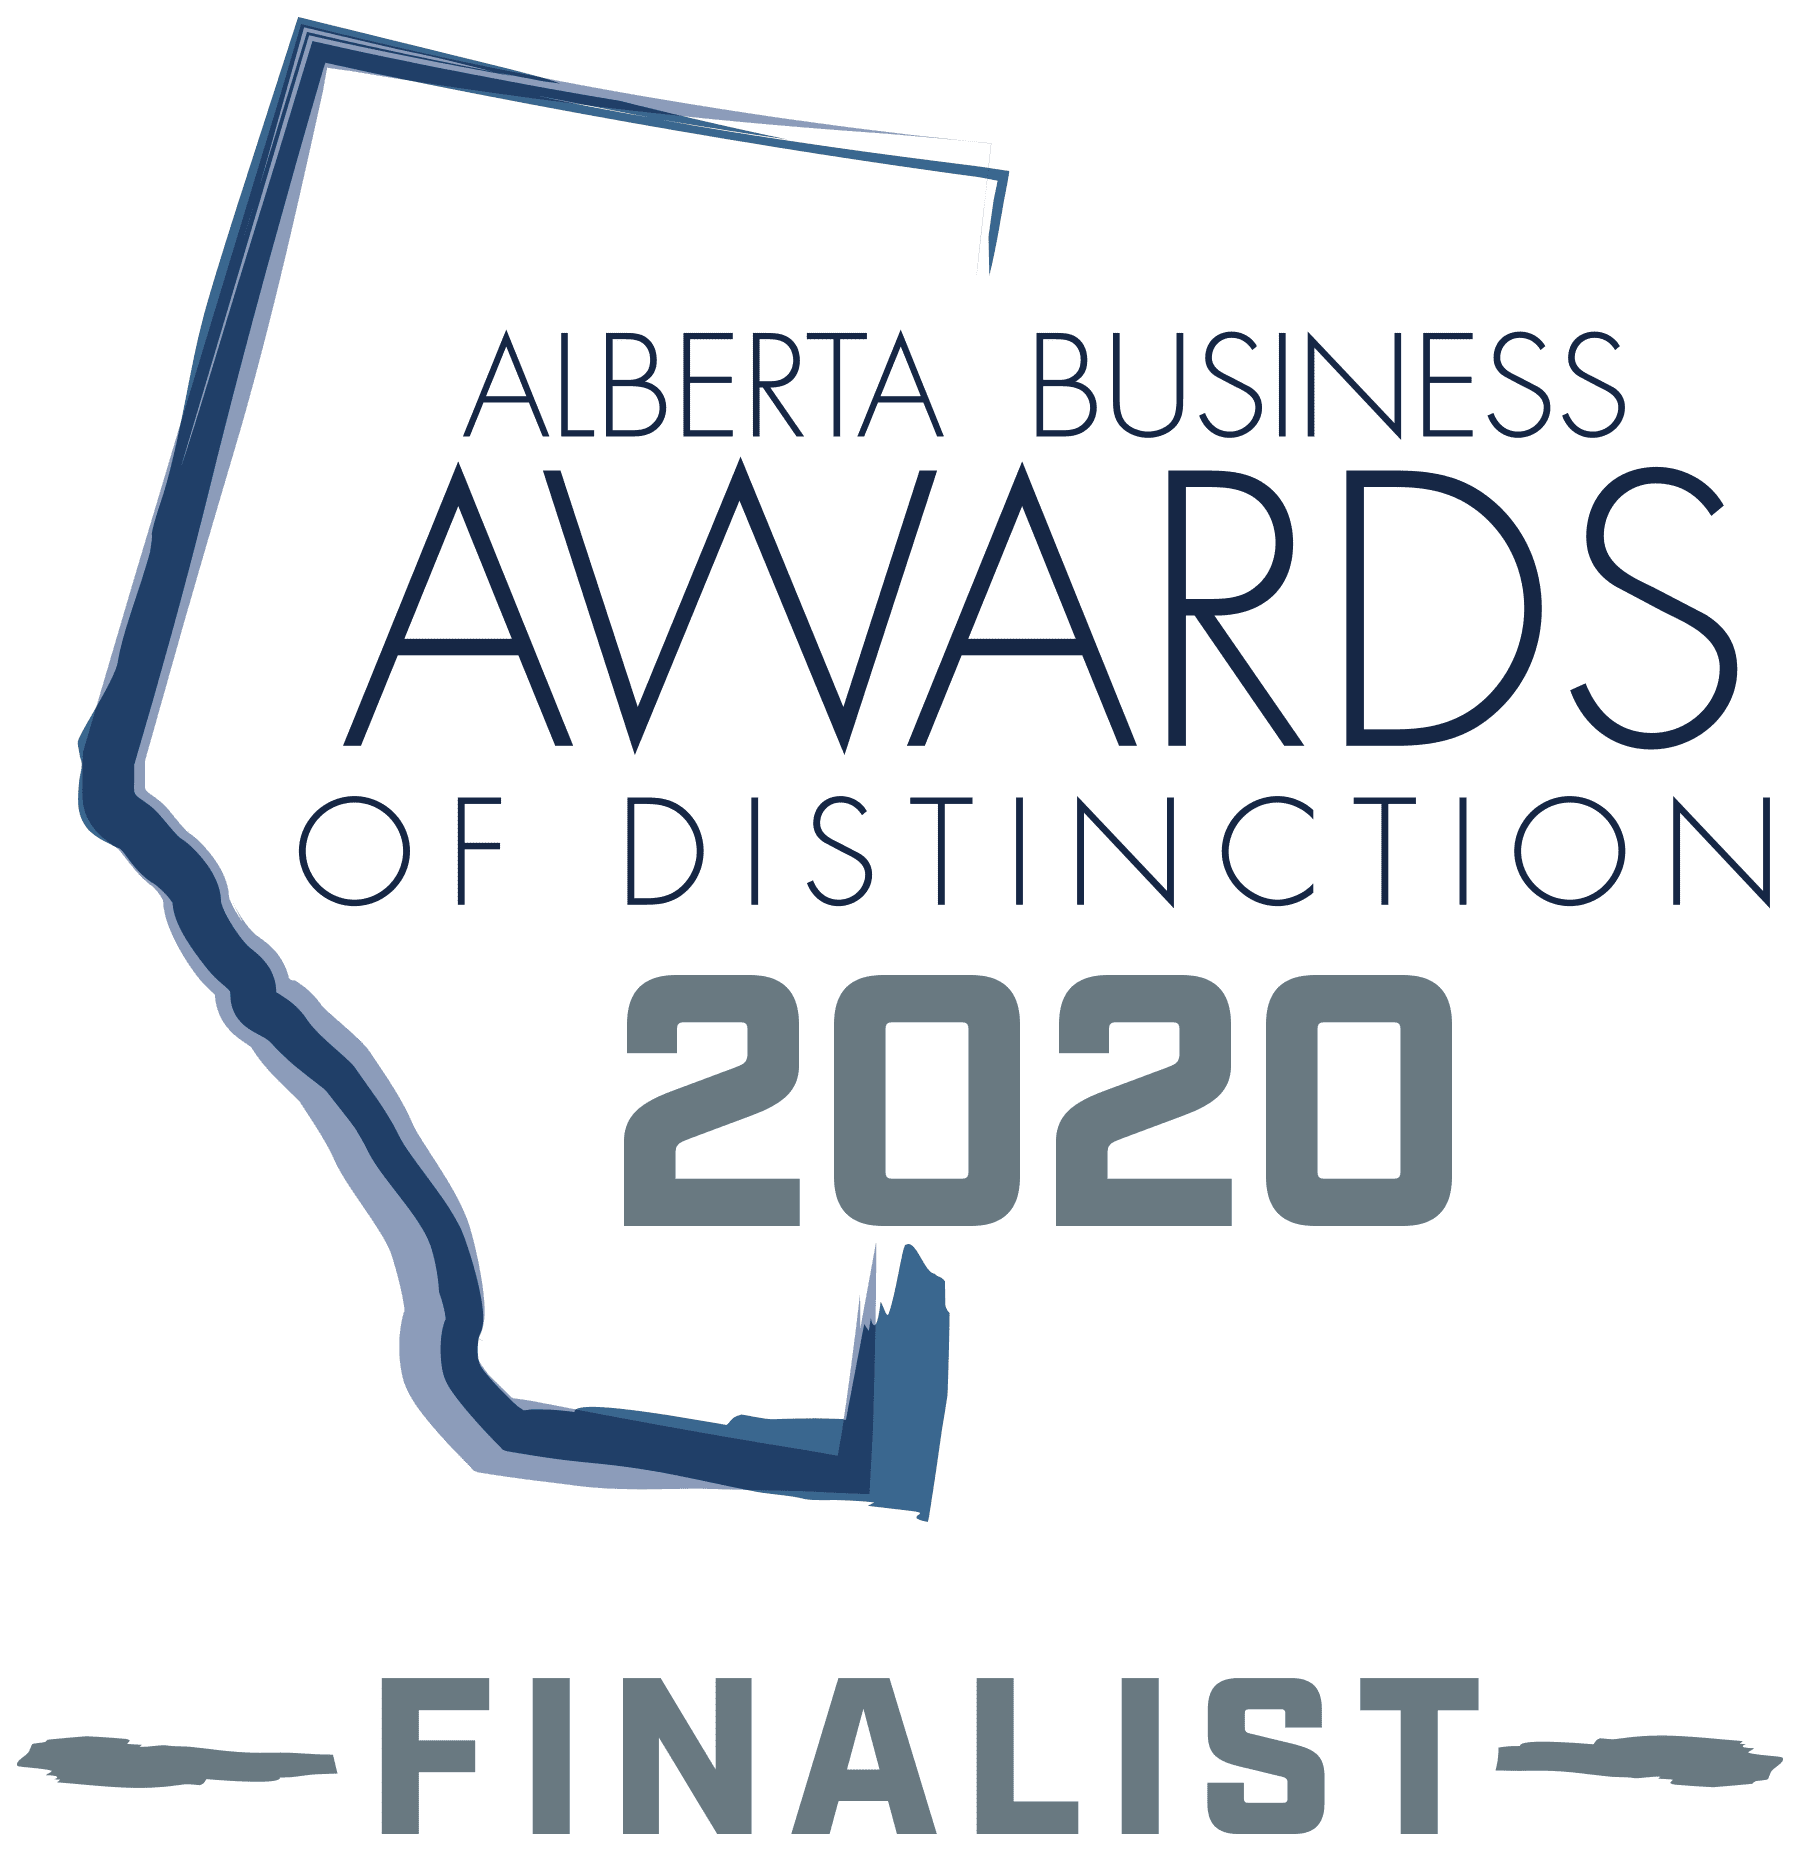 Alberta Business Awards of Distinction 2020